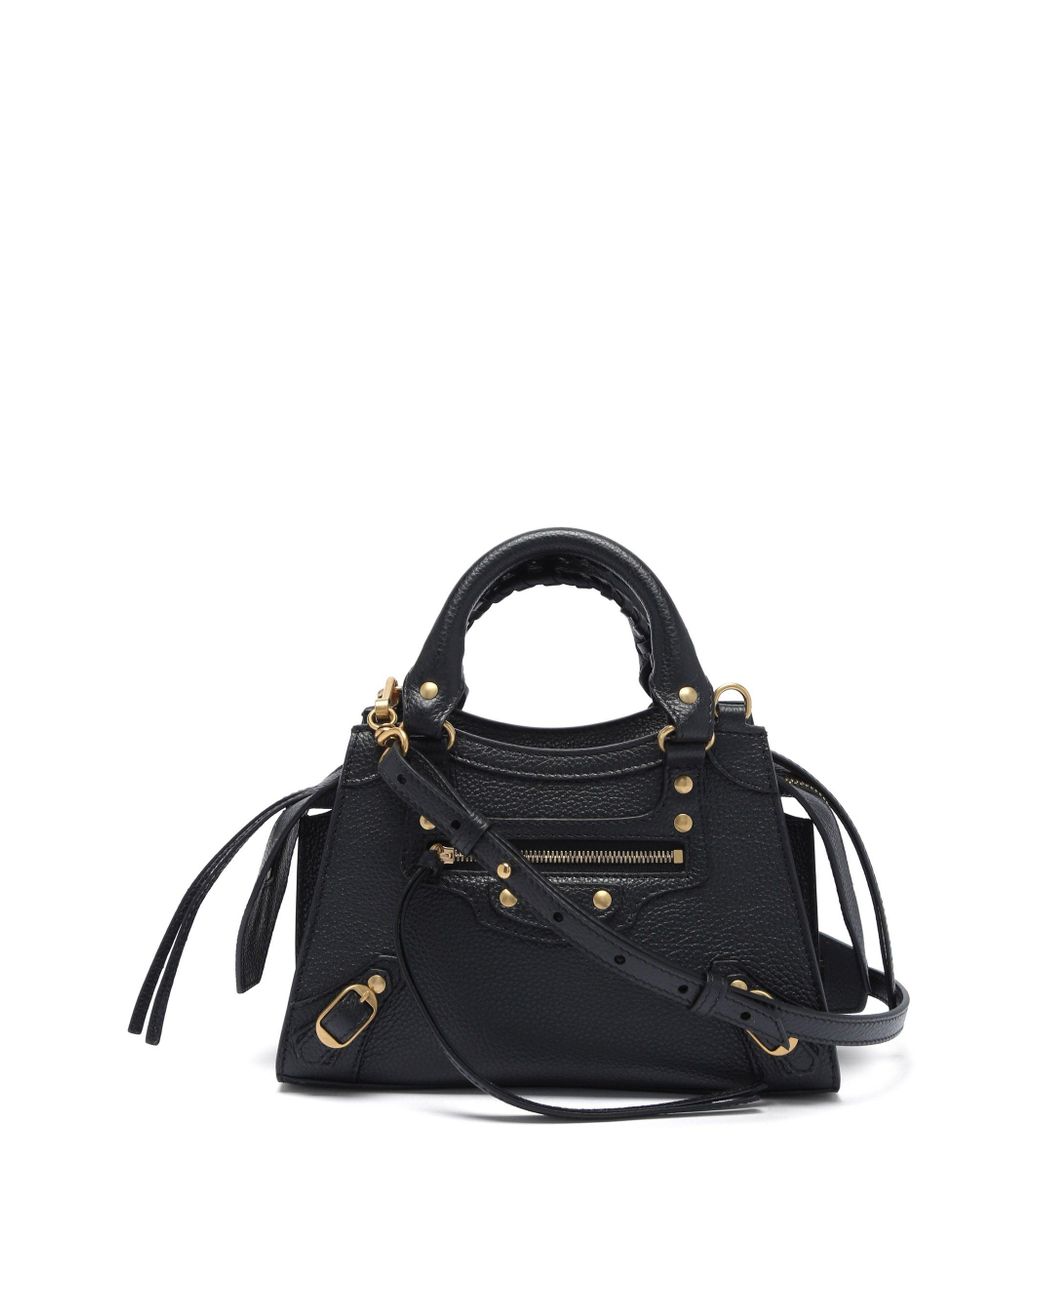 Balenciaga Neo Classic City Mini Grained-leather Bag in Black - Lyst